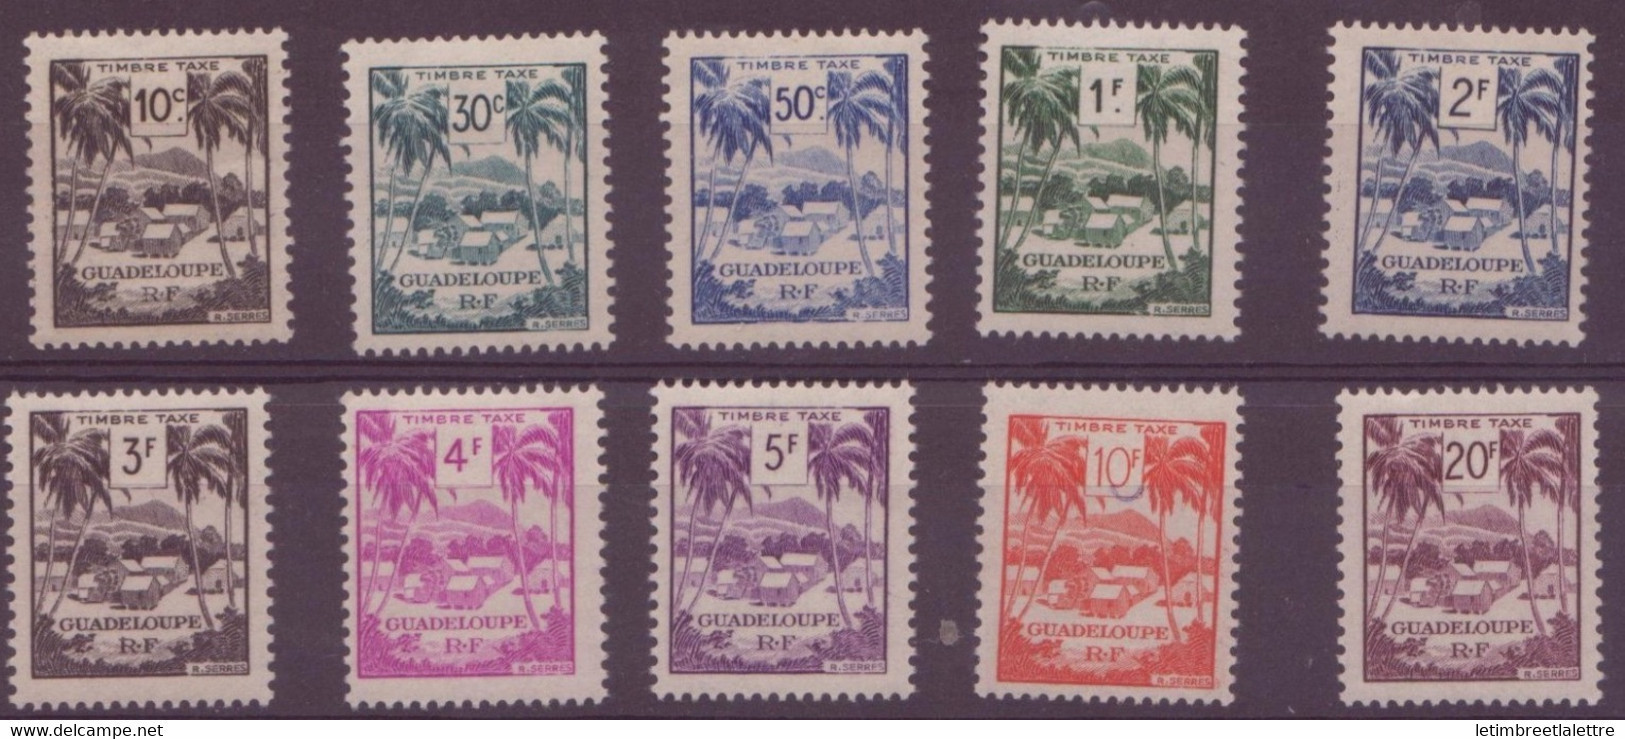 ⭐ Guadeloupe - Taxe - YT N° 41 à 50 ** - Neuf Sans Charnière - 1947 ⭐ - Segnatasse